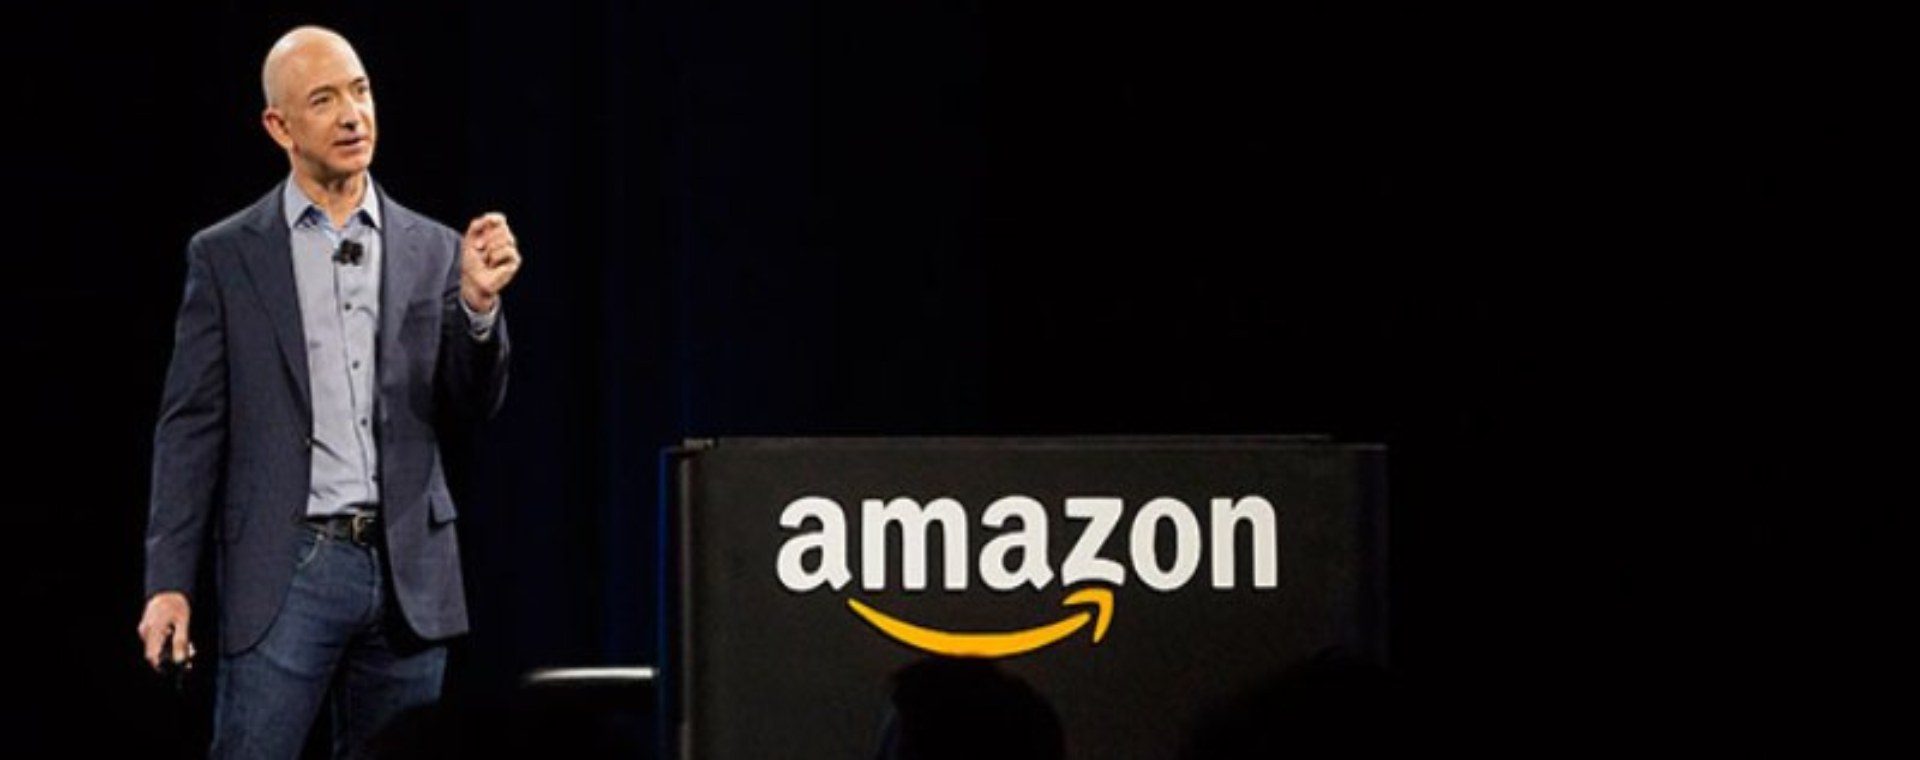 CEO Amazon Jeff Bezos semakin kaya saat pandemi virus Corona (Covid-19)./Intheblack